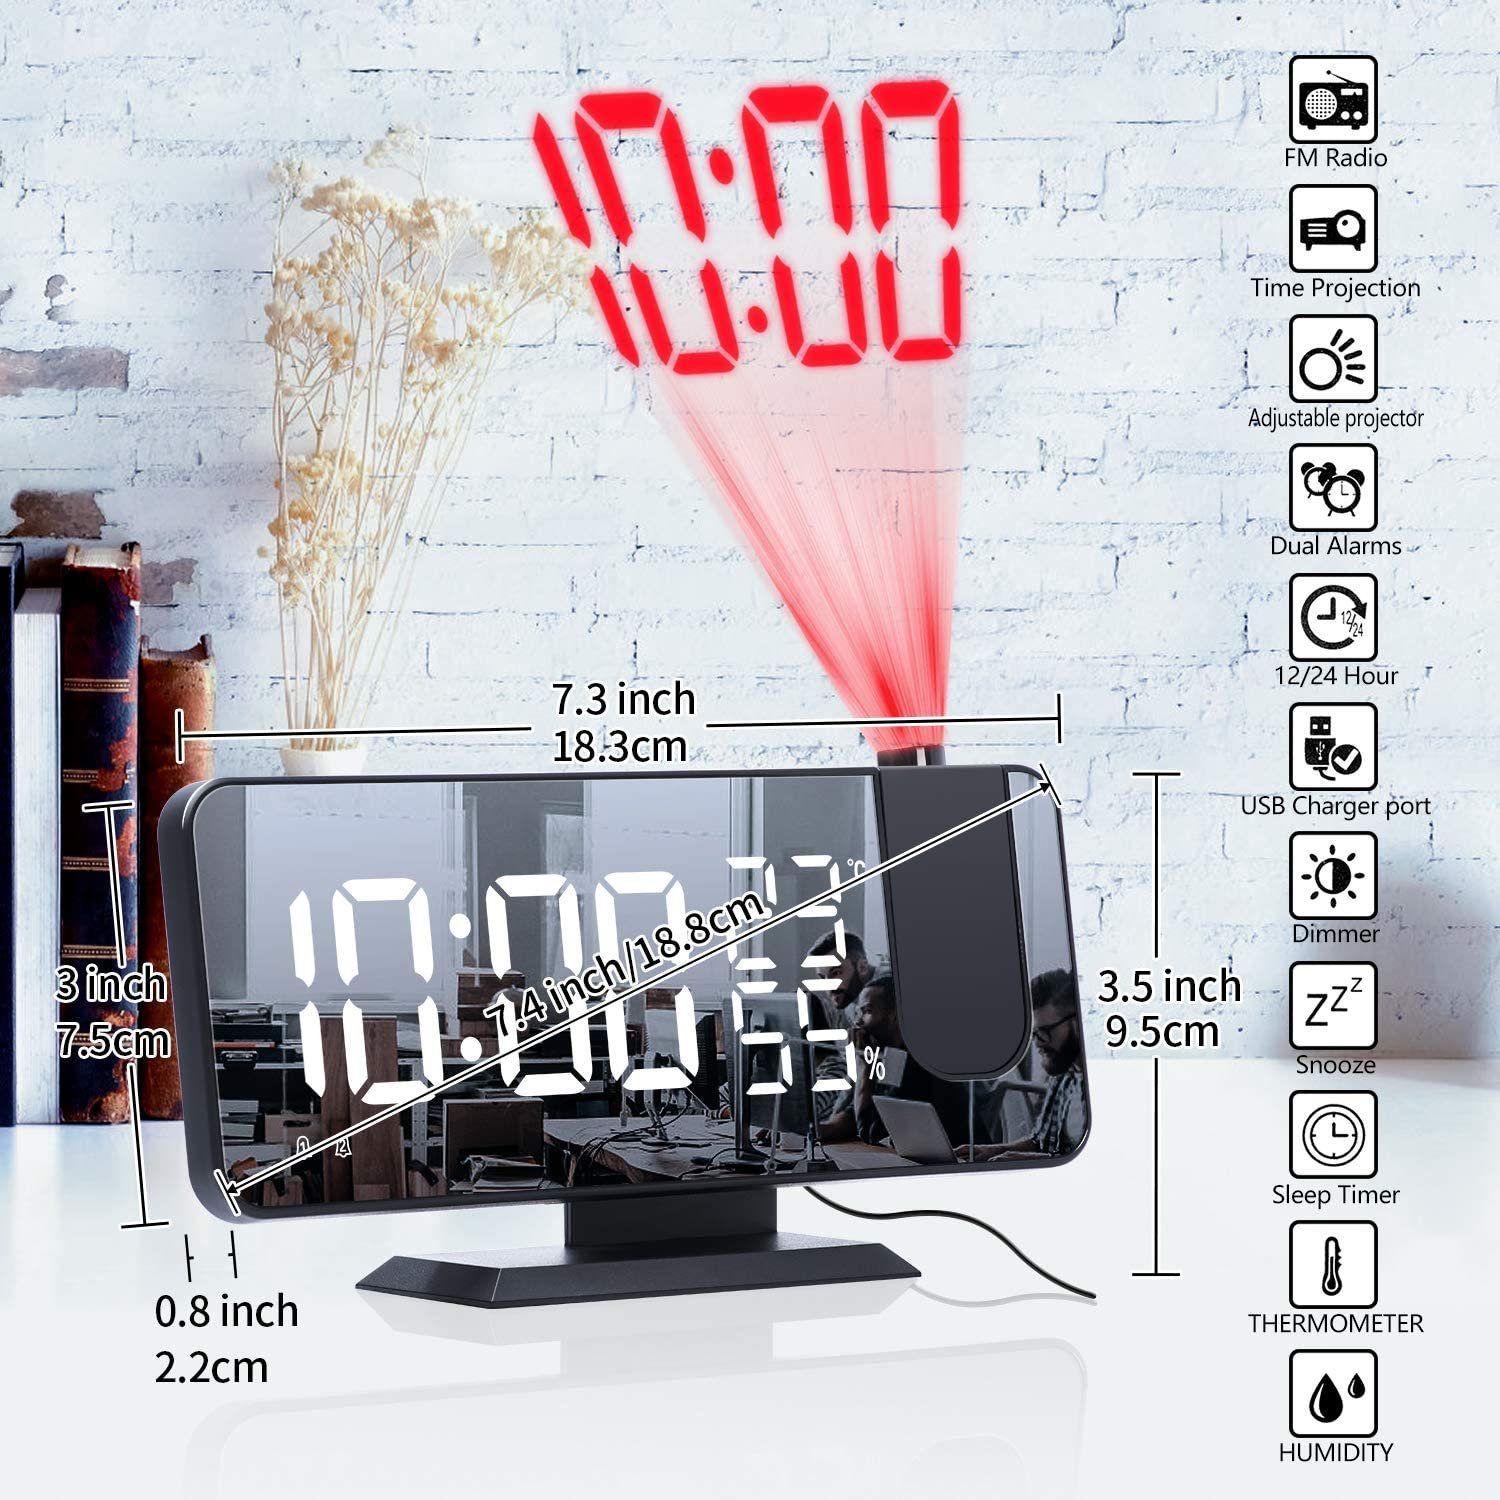 Mutoy Projektionswecker mit Projektions Projektionshelligkeit,32FM Projektor,LED-Anzeige, 180° digital Dual-Alarm Schwarz-Weiß Snooze,4 Projektionswecker, Radio Radio Wecker